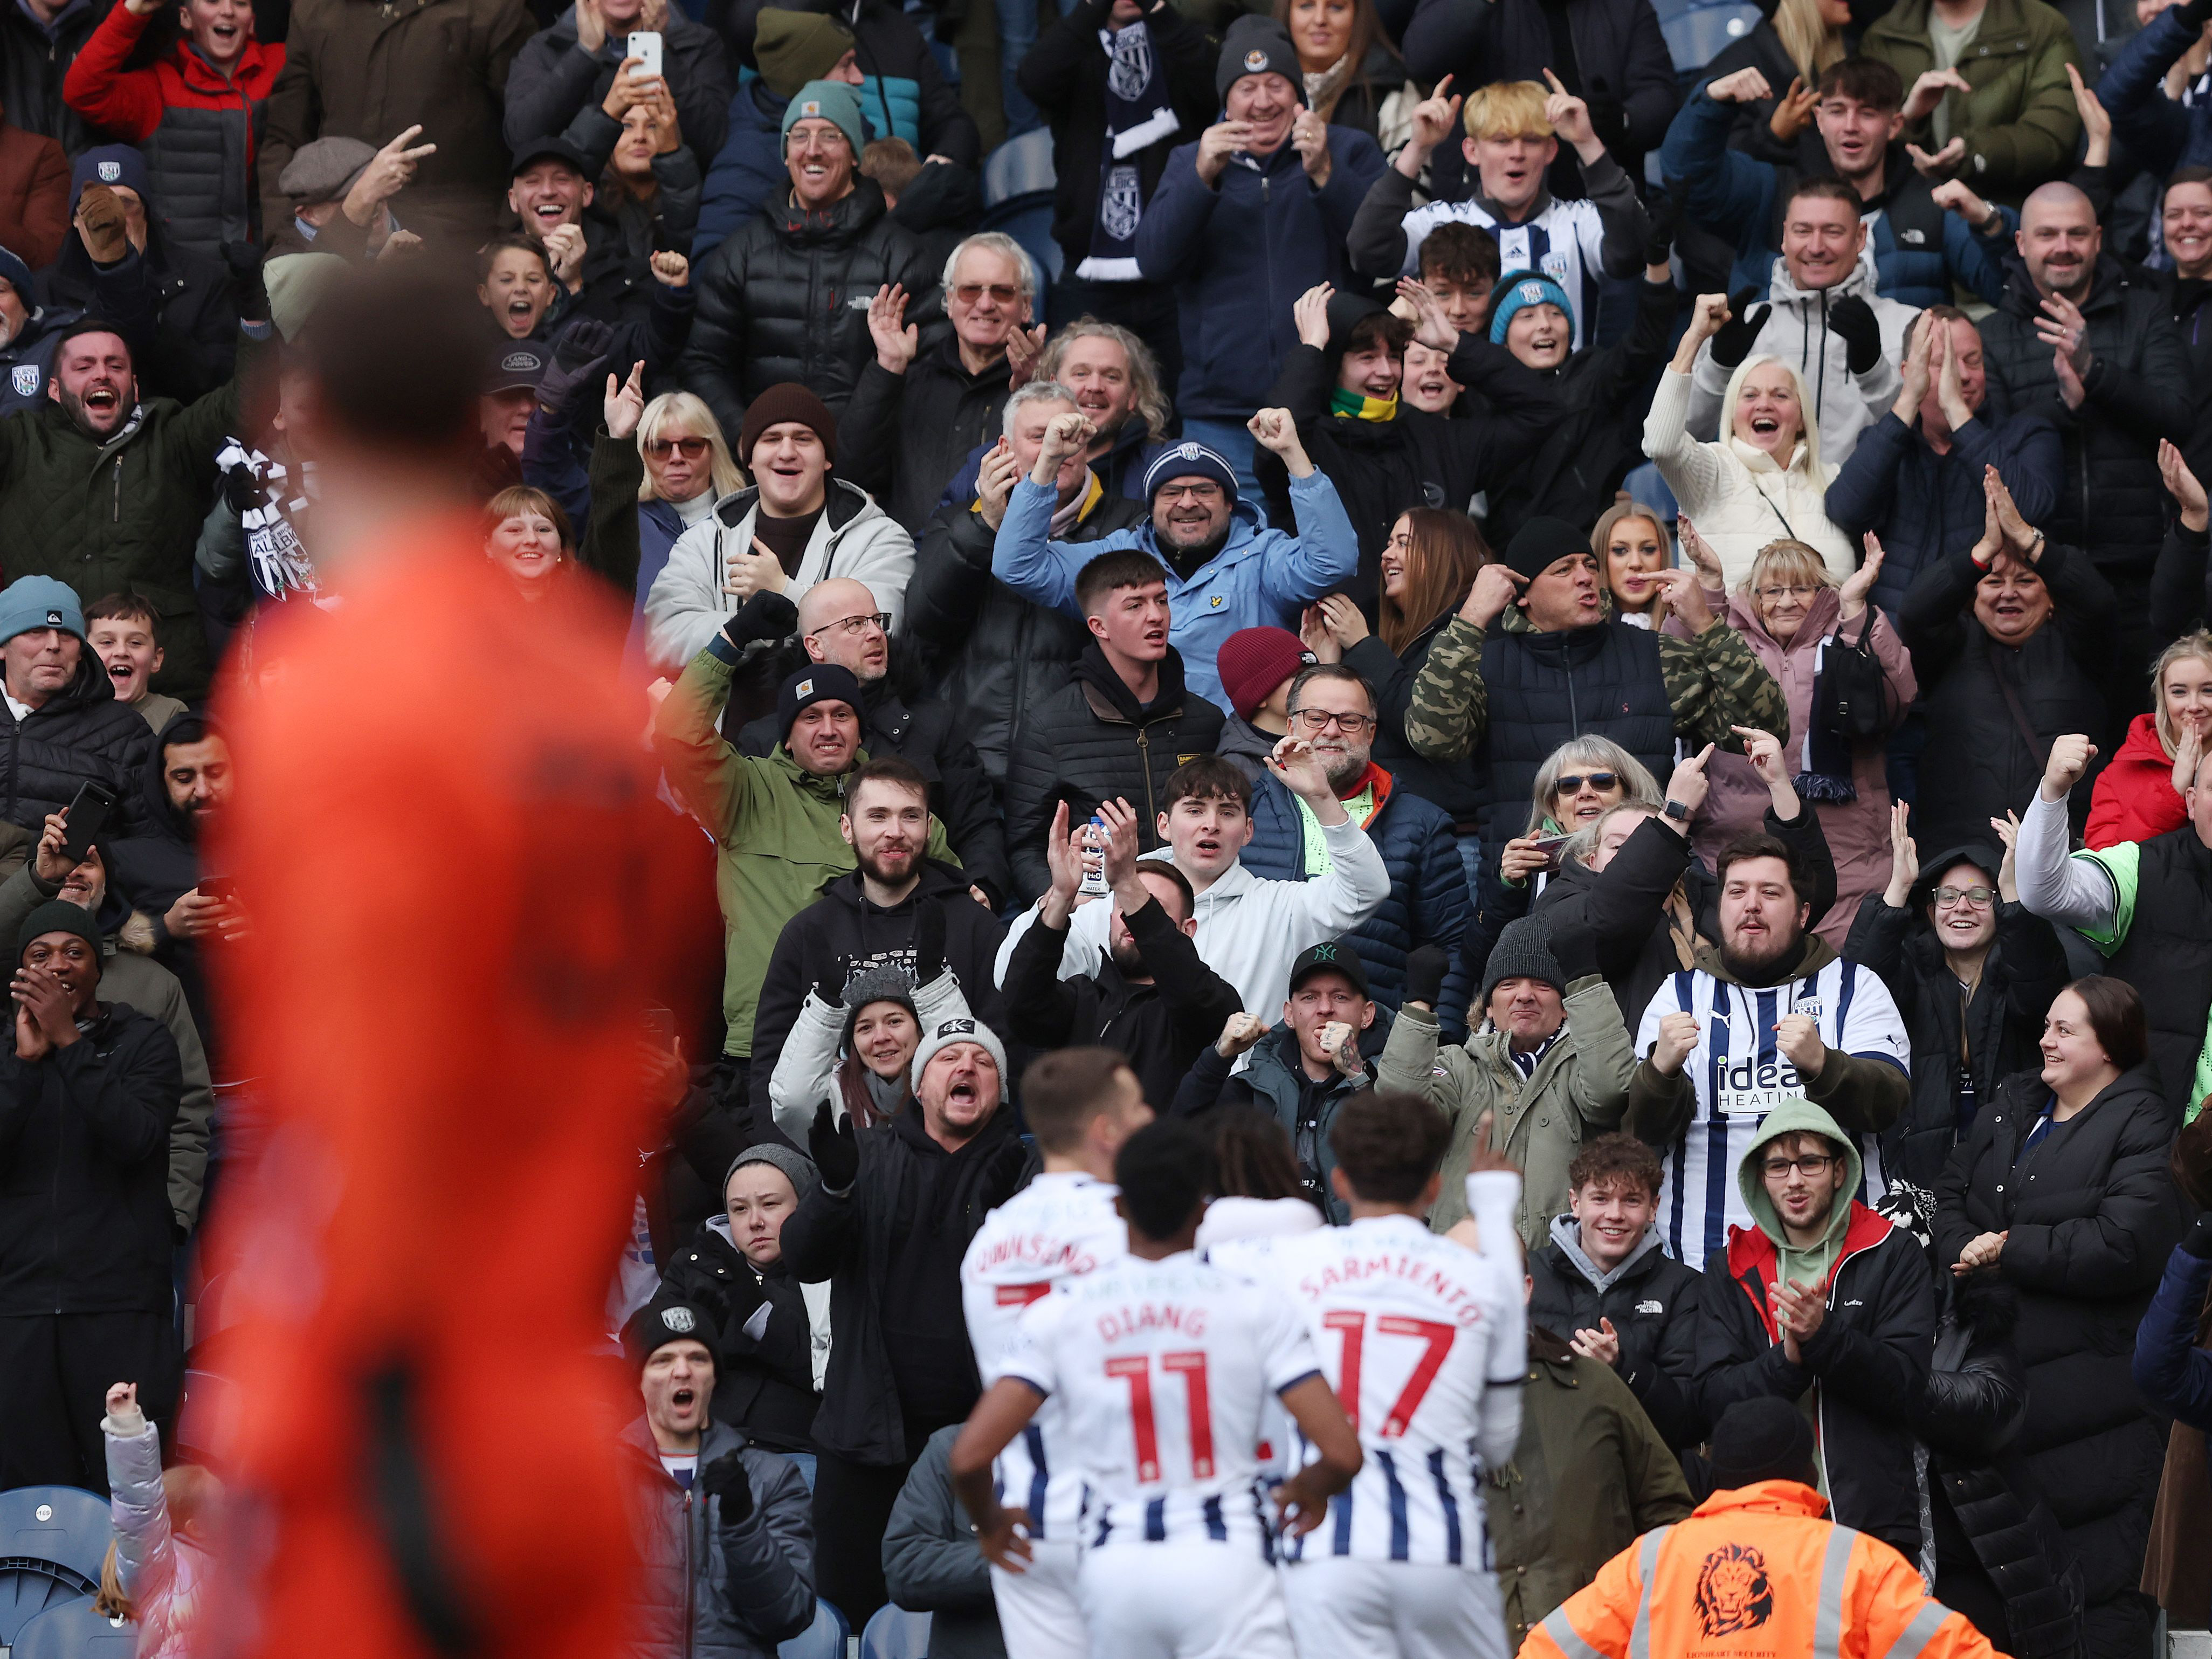 An image of Albion fans celebrating Thomas-Asante's goal against Stoke